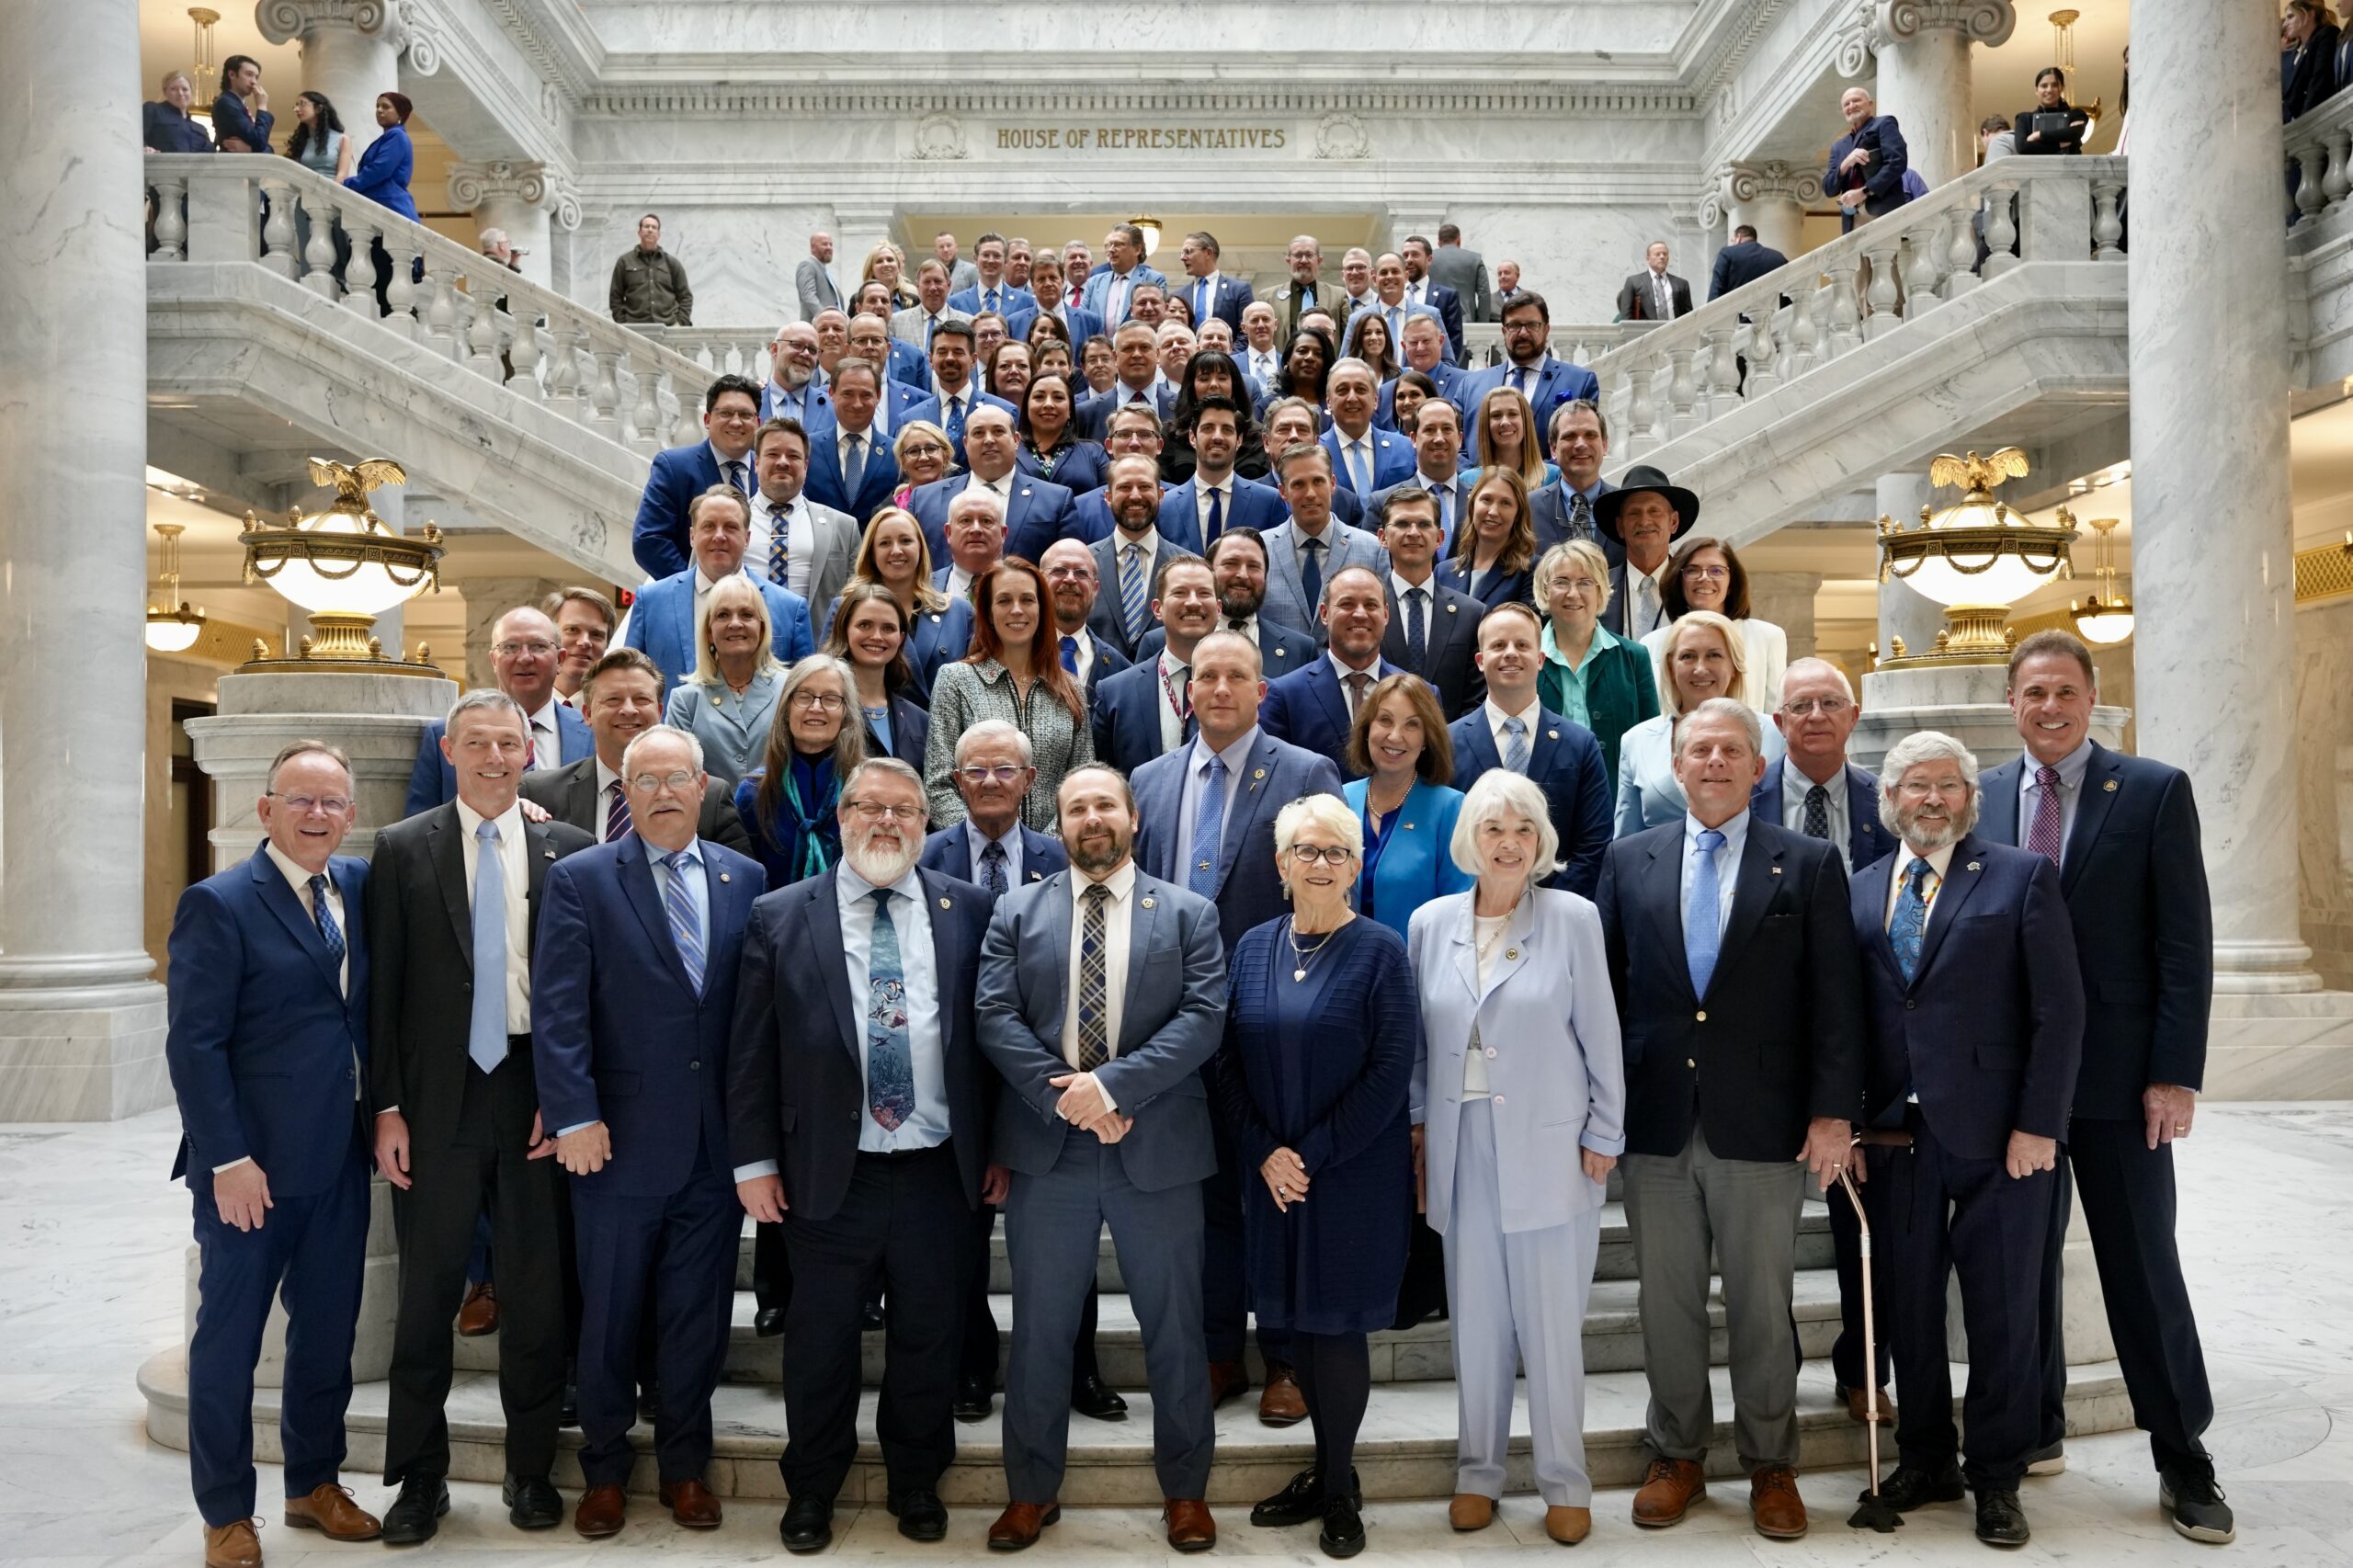 Legislators dressed in blue for Water Day